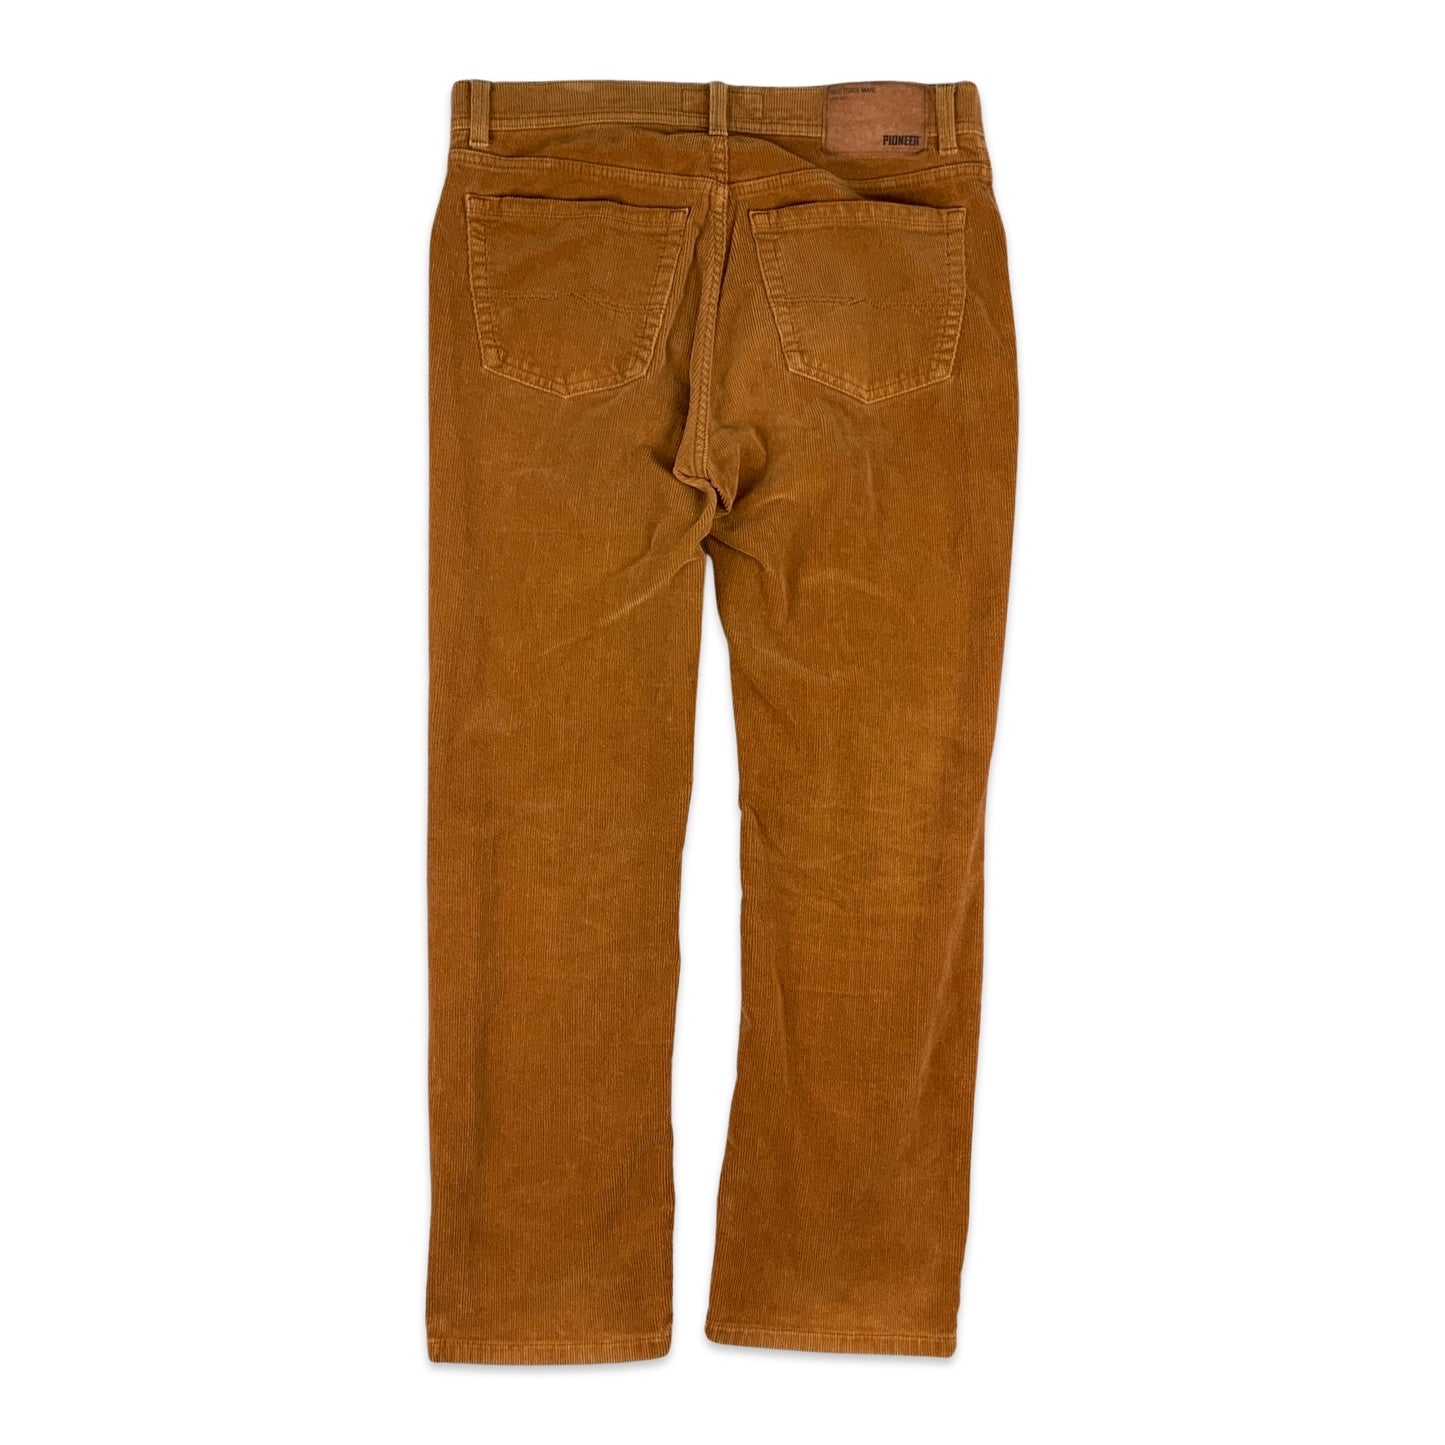 Vintage Orange Cord Trousers 34W 29L